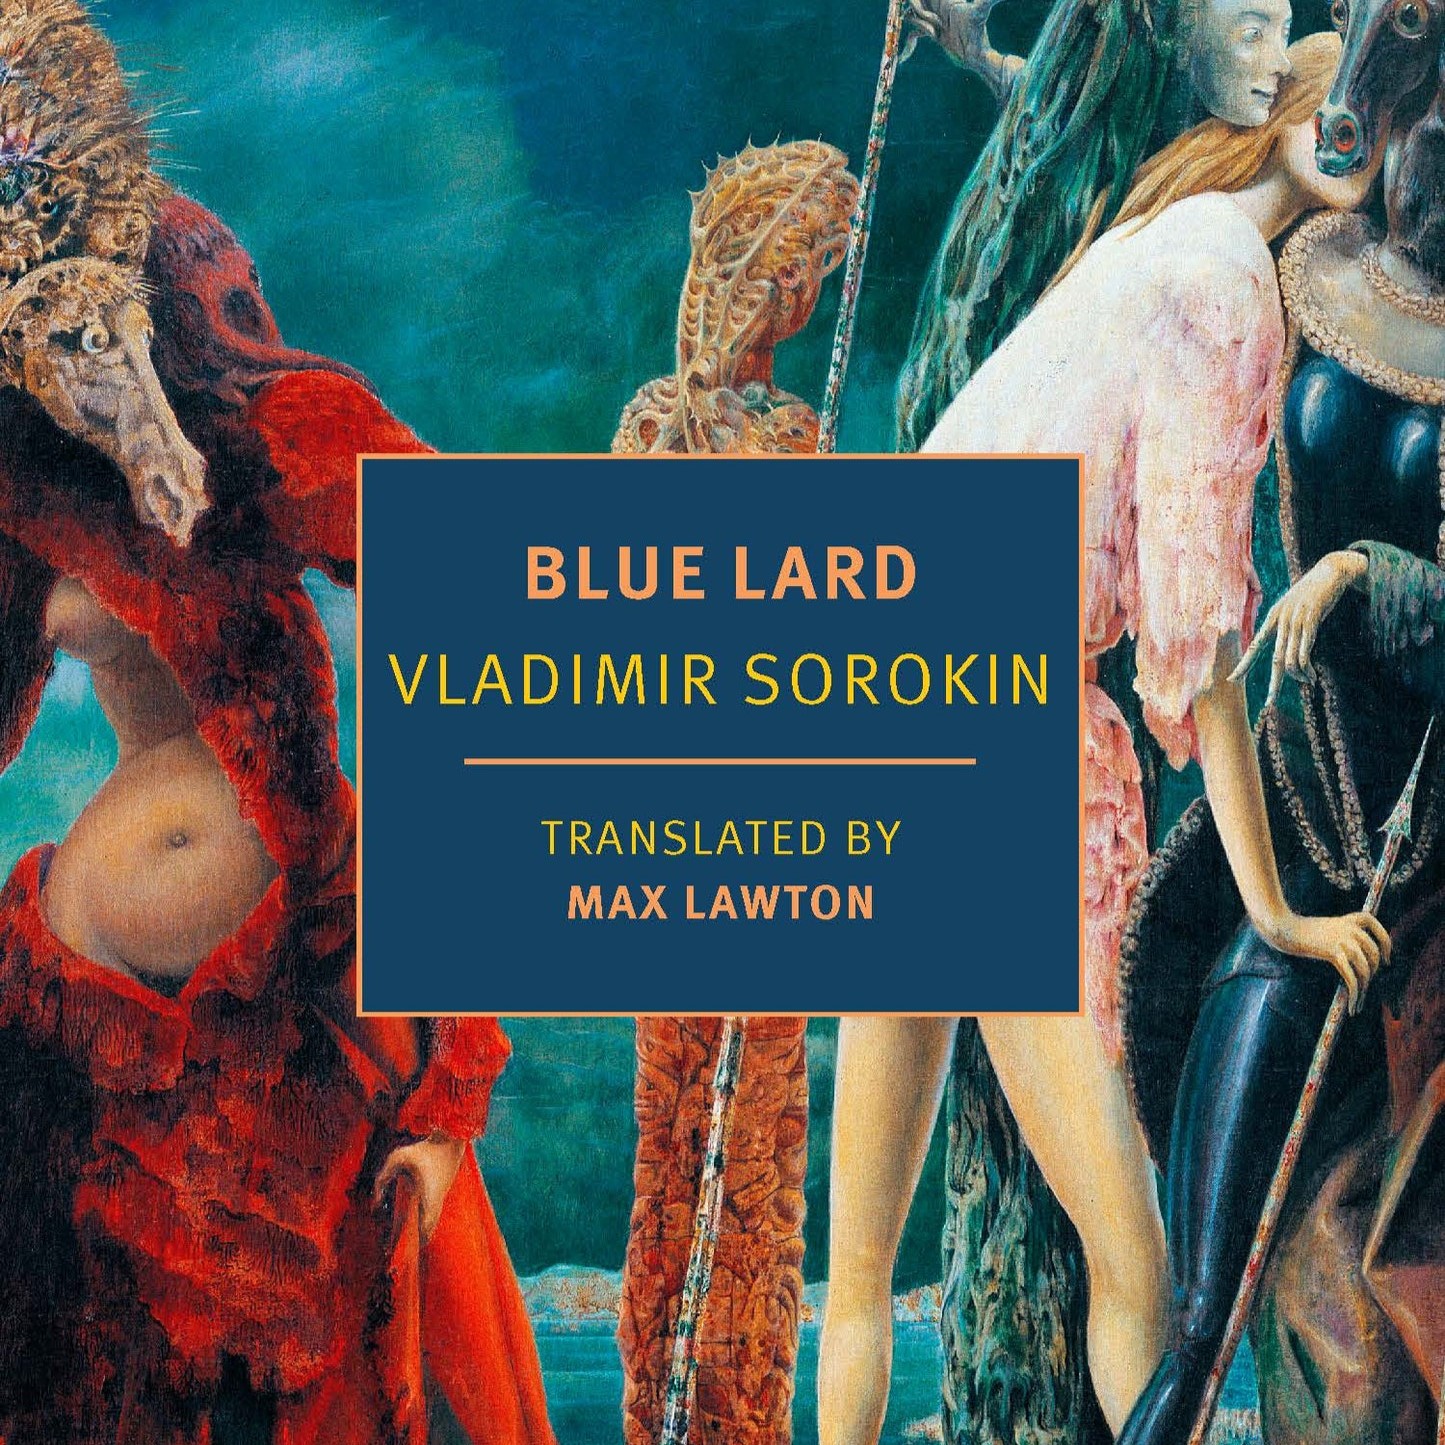 Blue Lard with Max Lawton